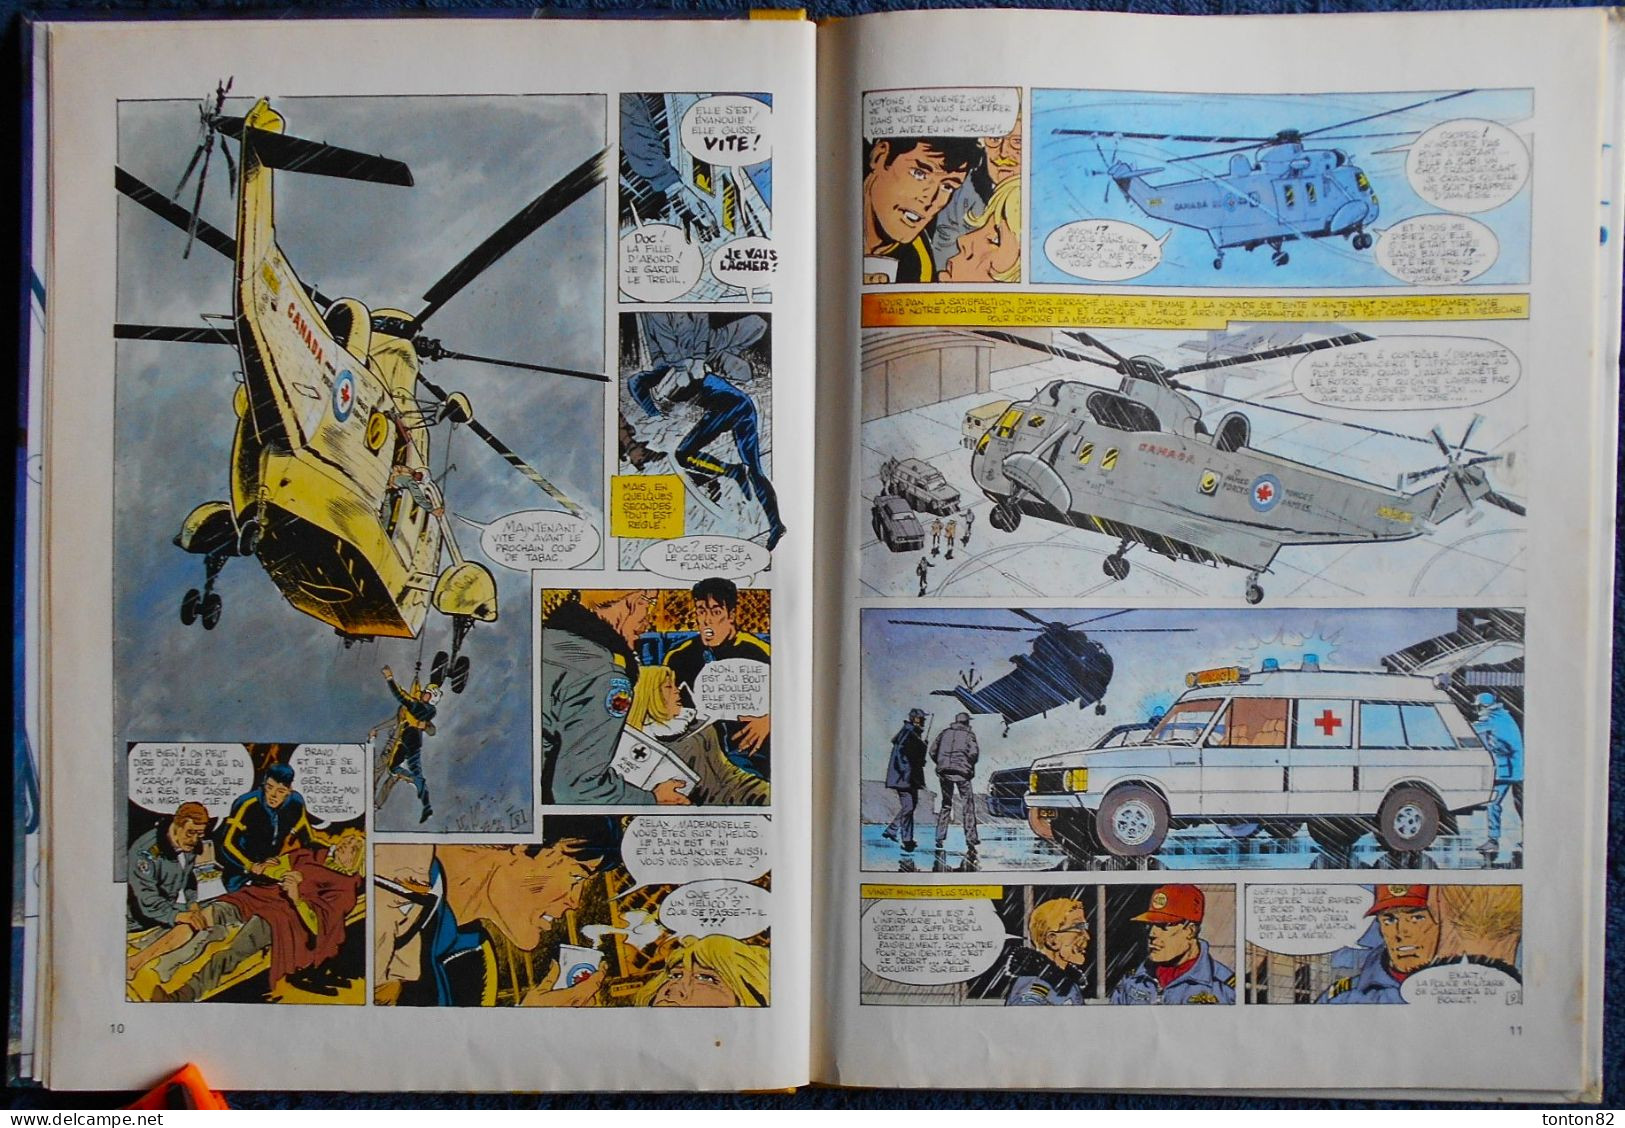 Albert Weinberg - Dan Cooper - N° 29 - L'aviatrice Sans Nom - Hachette - ( E.O 1982 ) . - Dan Cooper